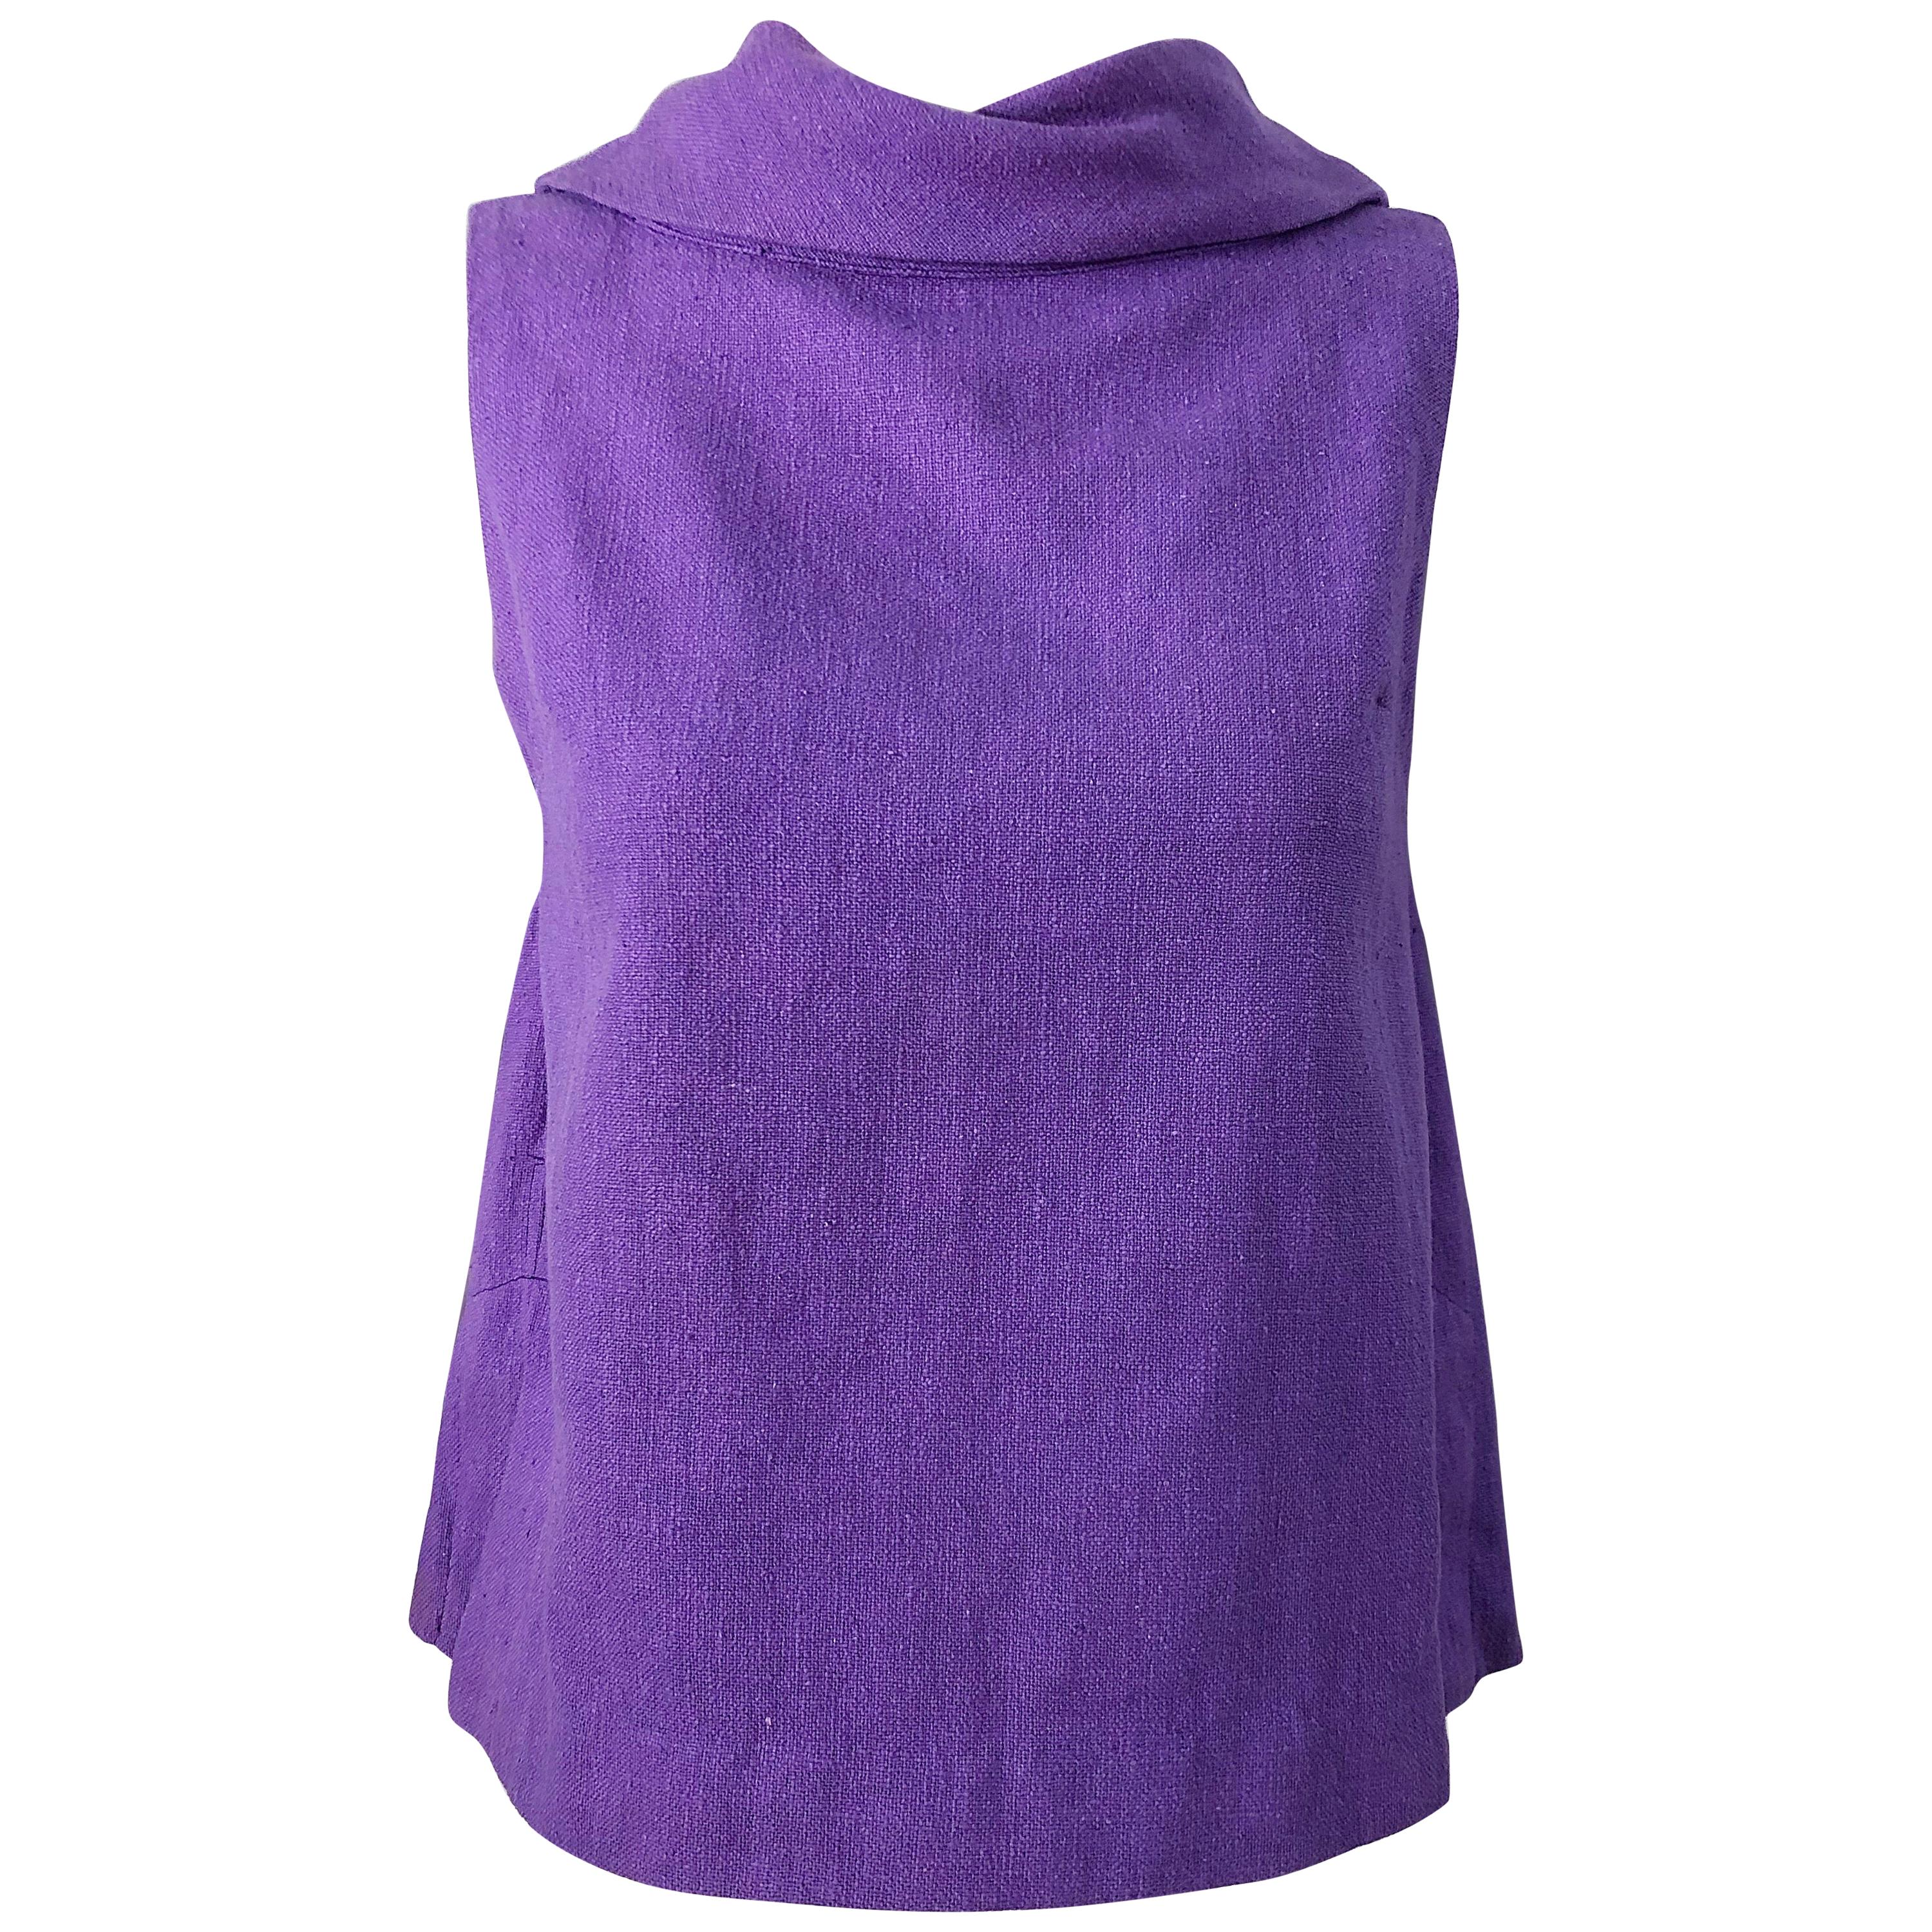 Chic 1960s Purple Linen Empire Waist Vintage 60s A Line Sleeveless Top Shirt For Sale